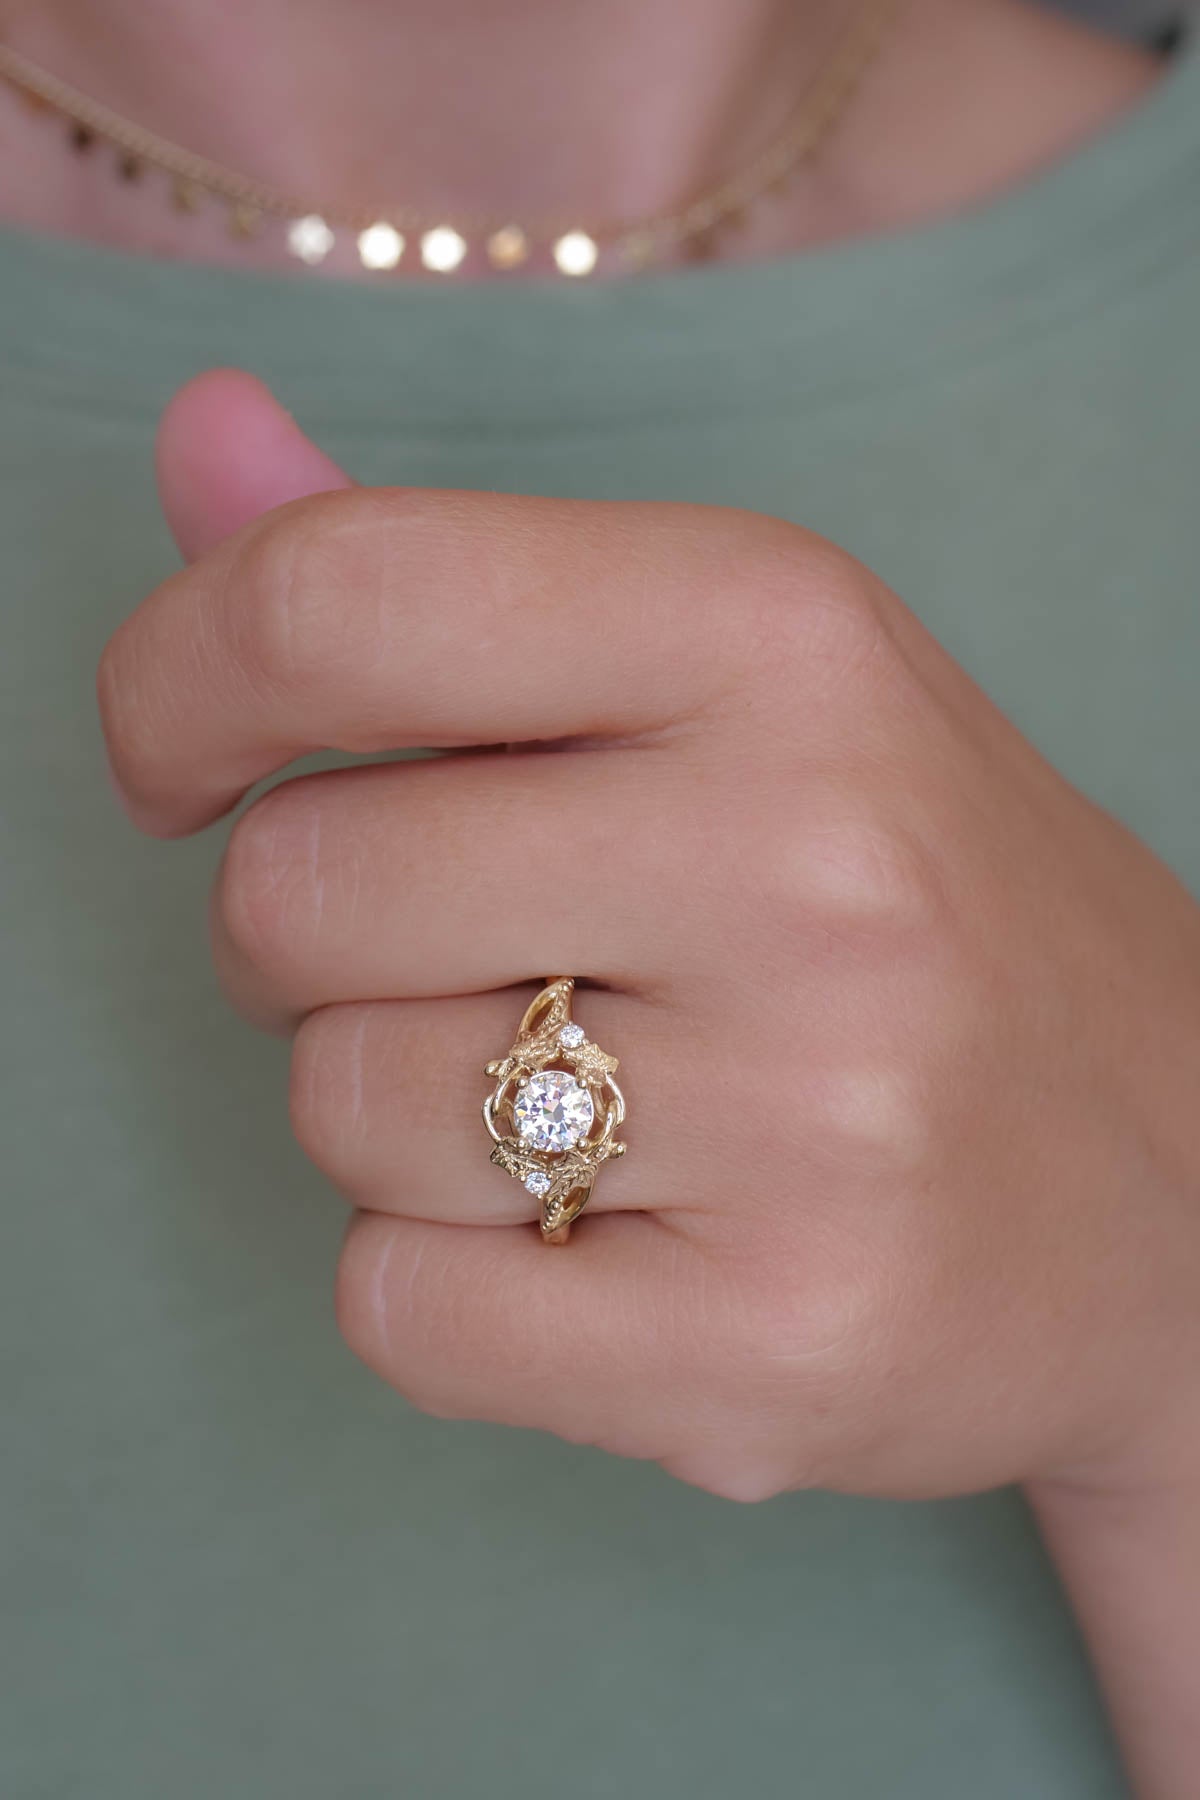 Moissanite engagement ring, gold leaves ring / Ivy Undina - Eden Garden Jewelry™